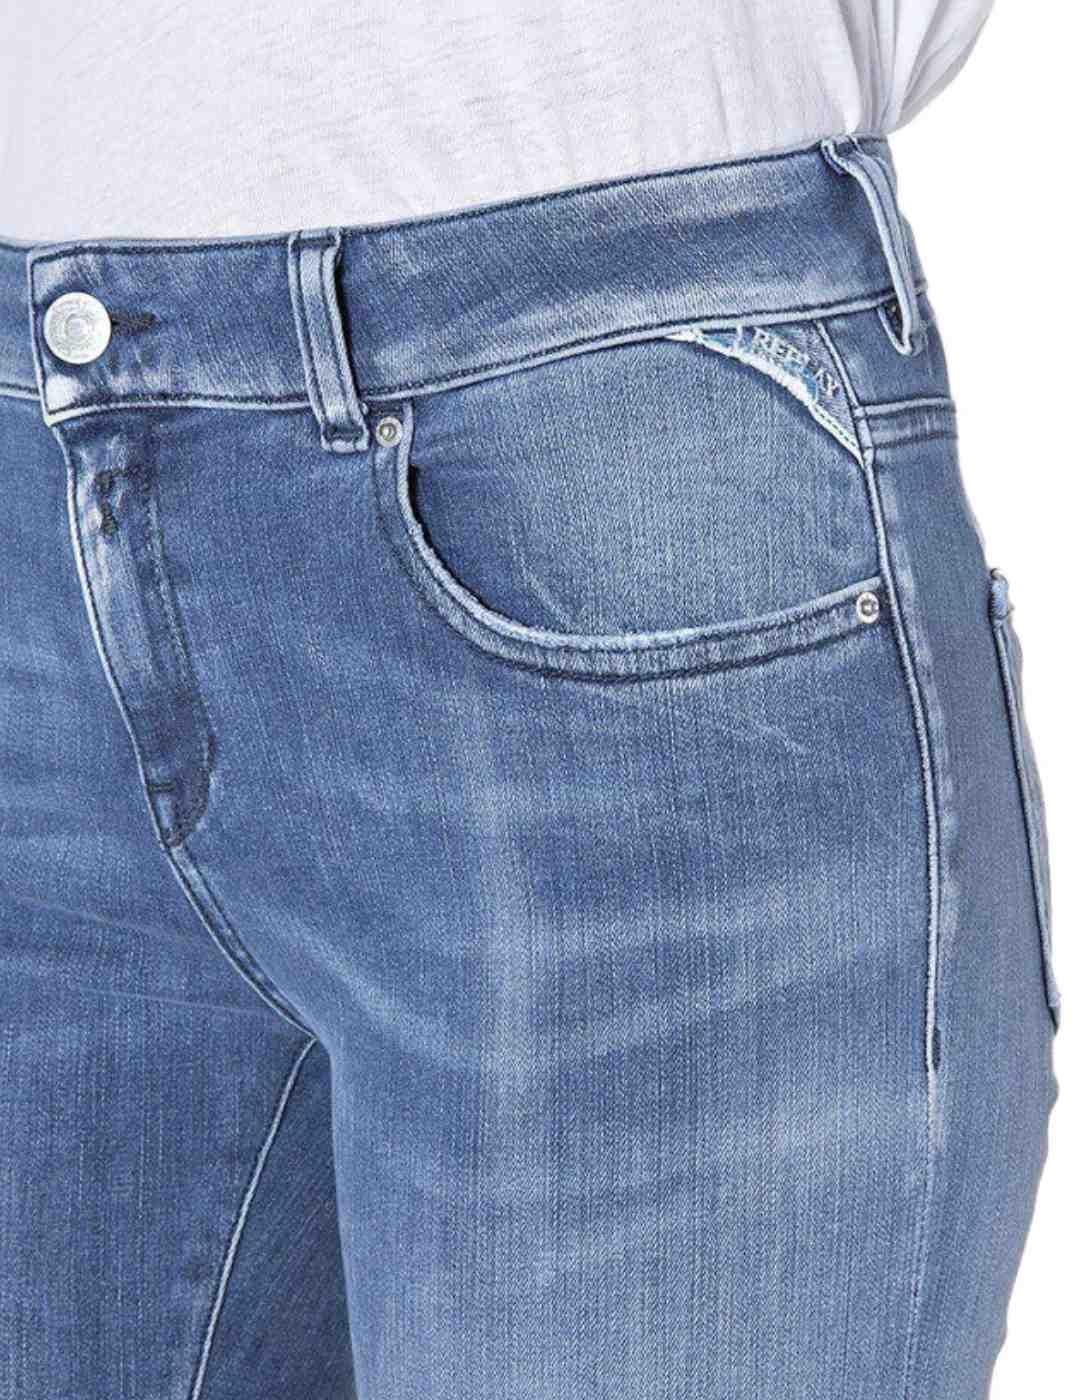 Pantalones Replay azul claro para mujer -a